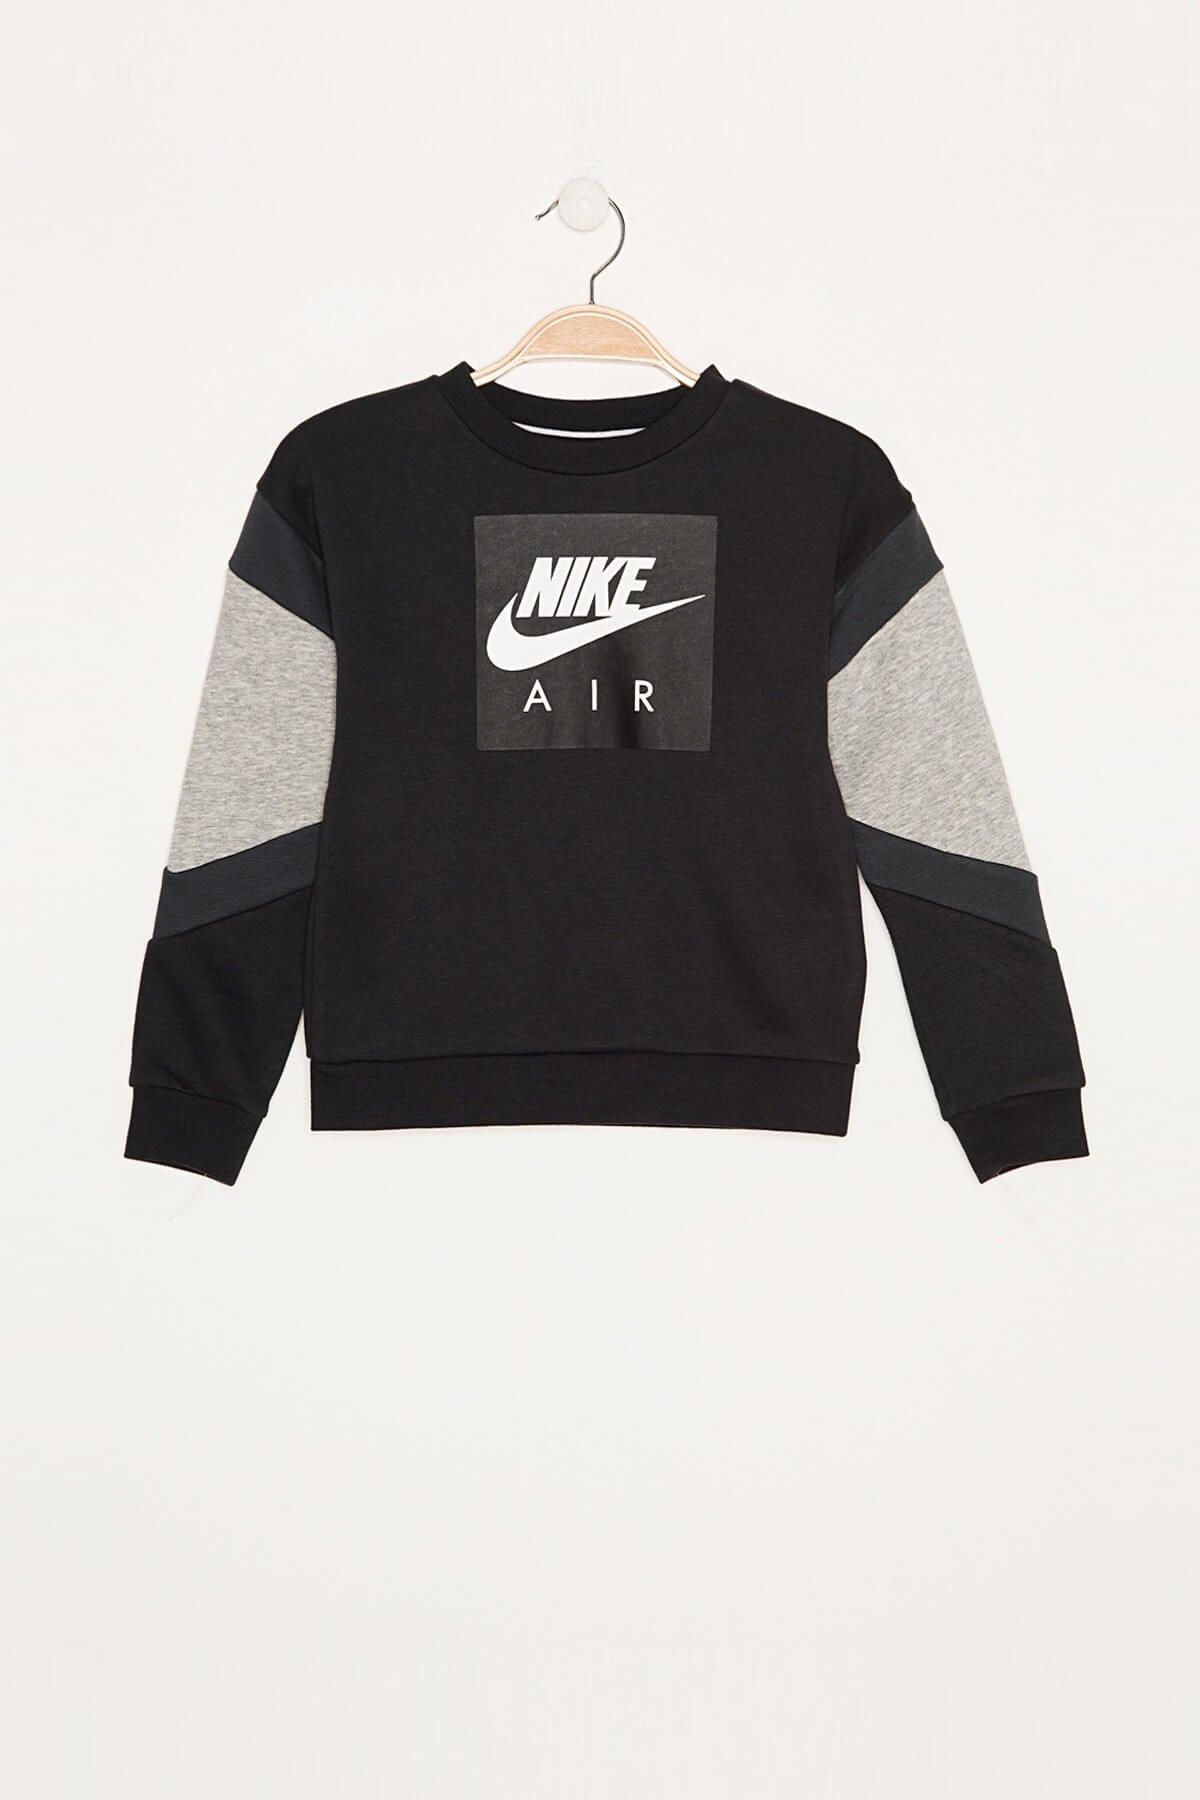 Nike Siyah Unisex Çocuk Sweatshirt